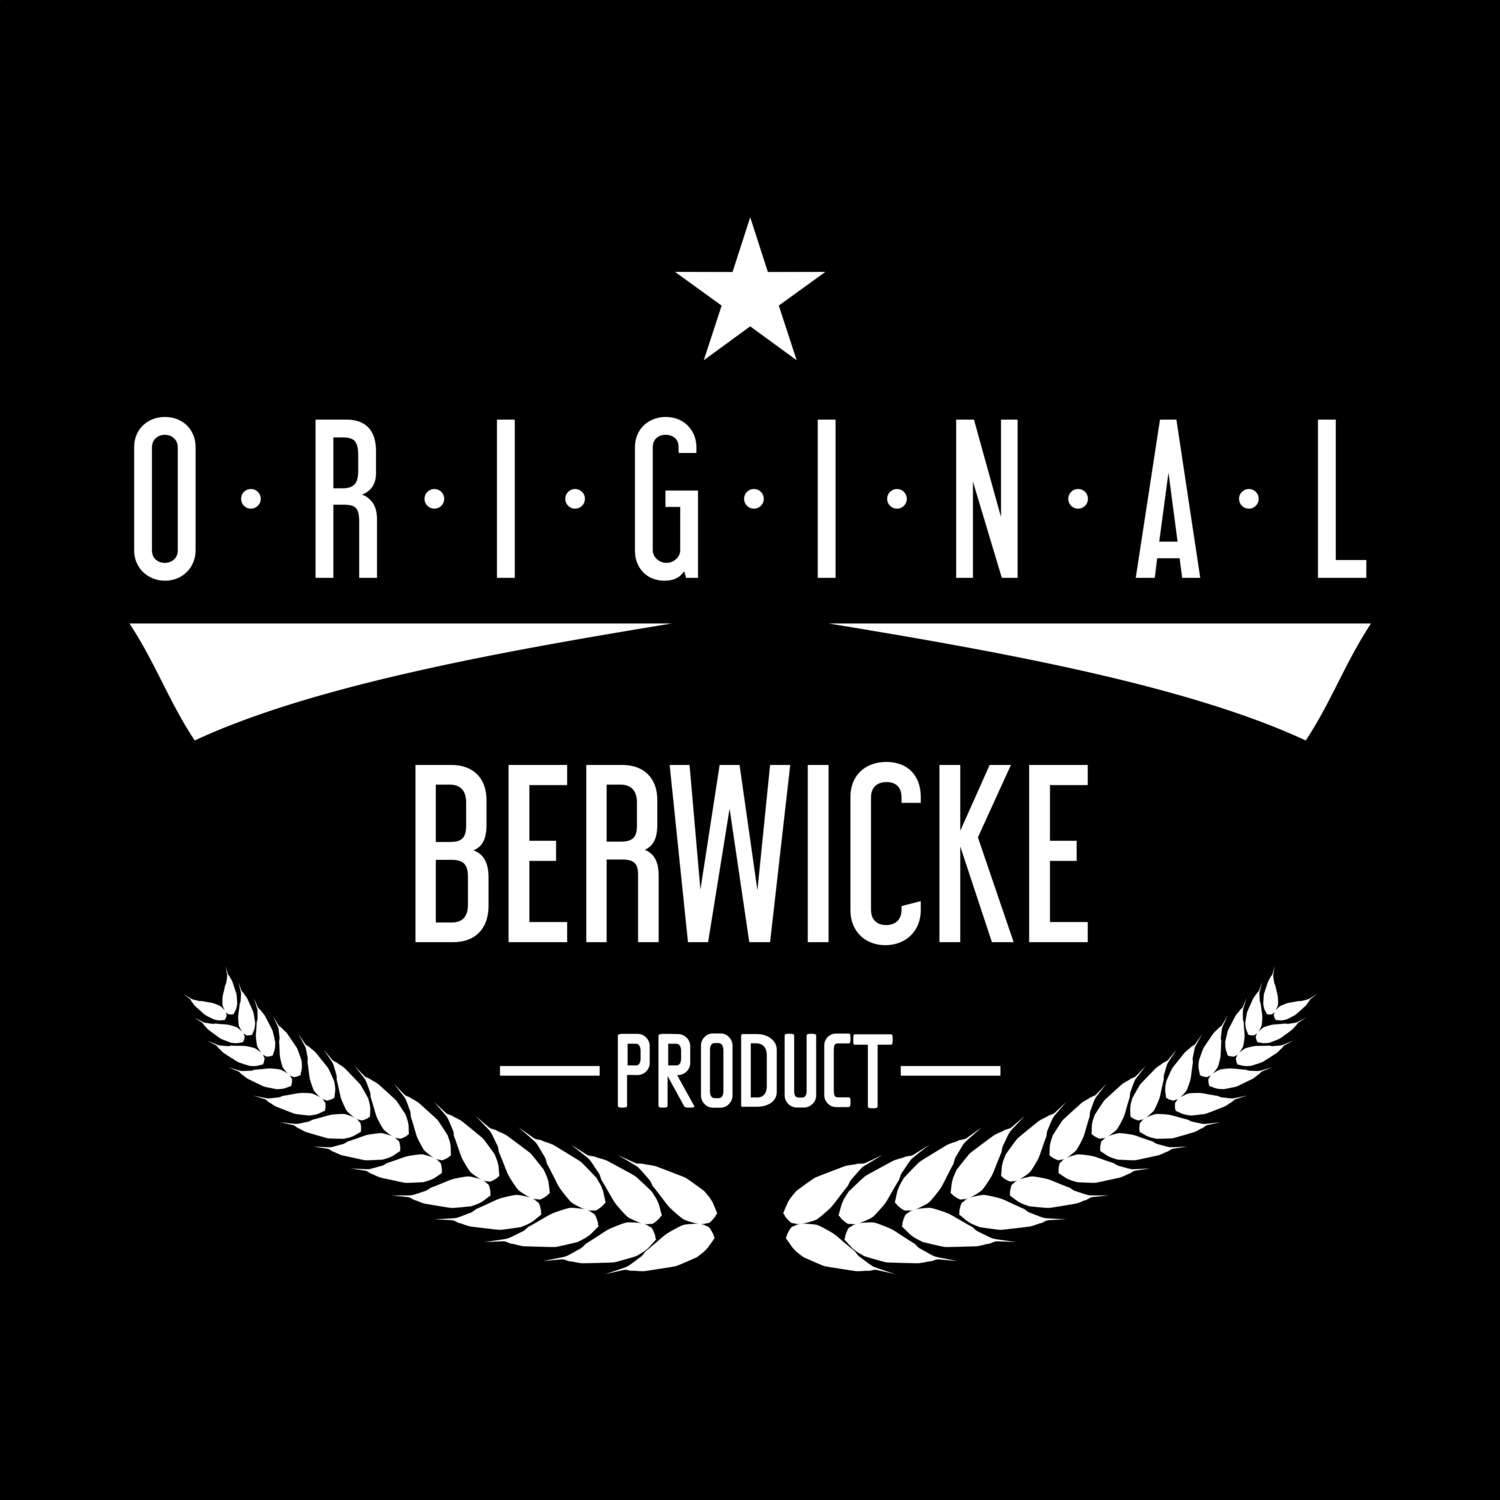 Berwicke T-Shirt »Original Product«